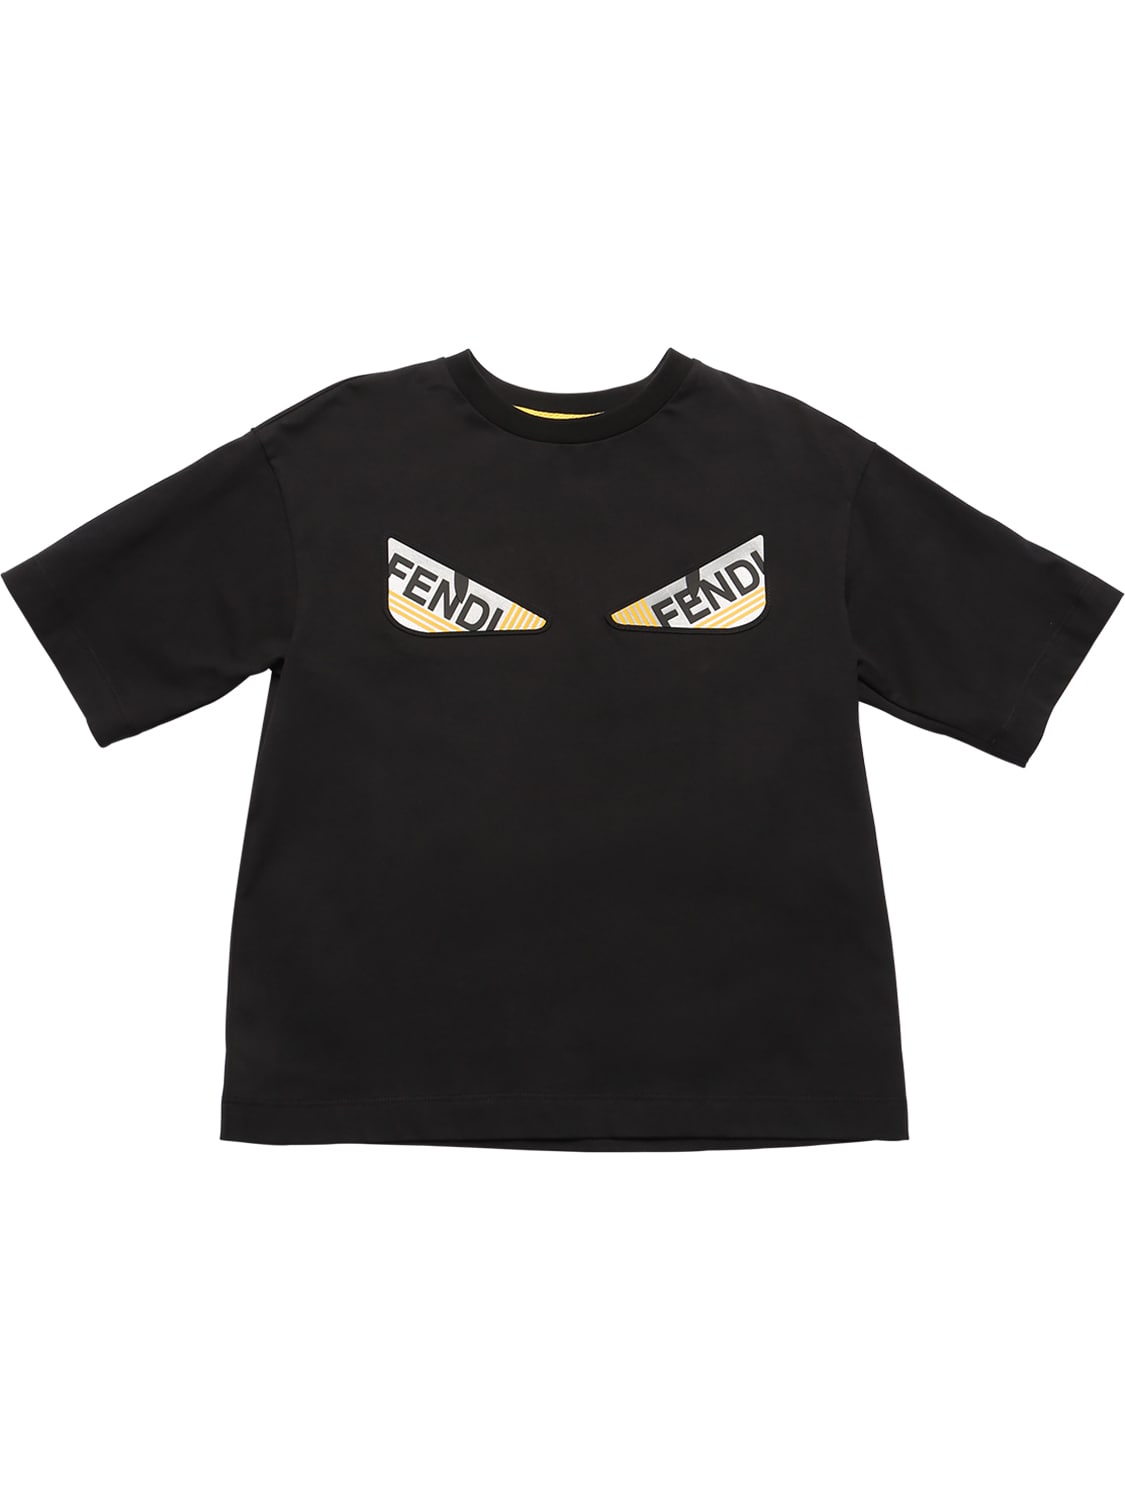 Fendi Kids T Shirt Top Sellers, 59% OFF | lagence.tv